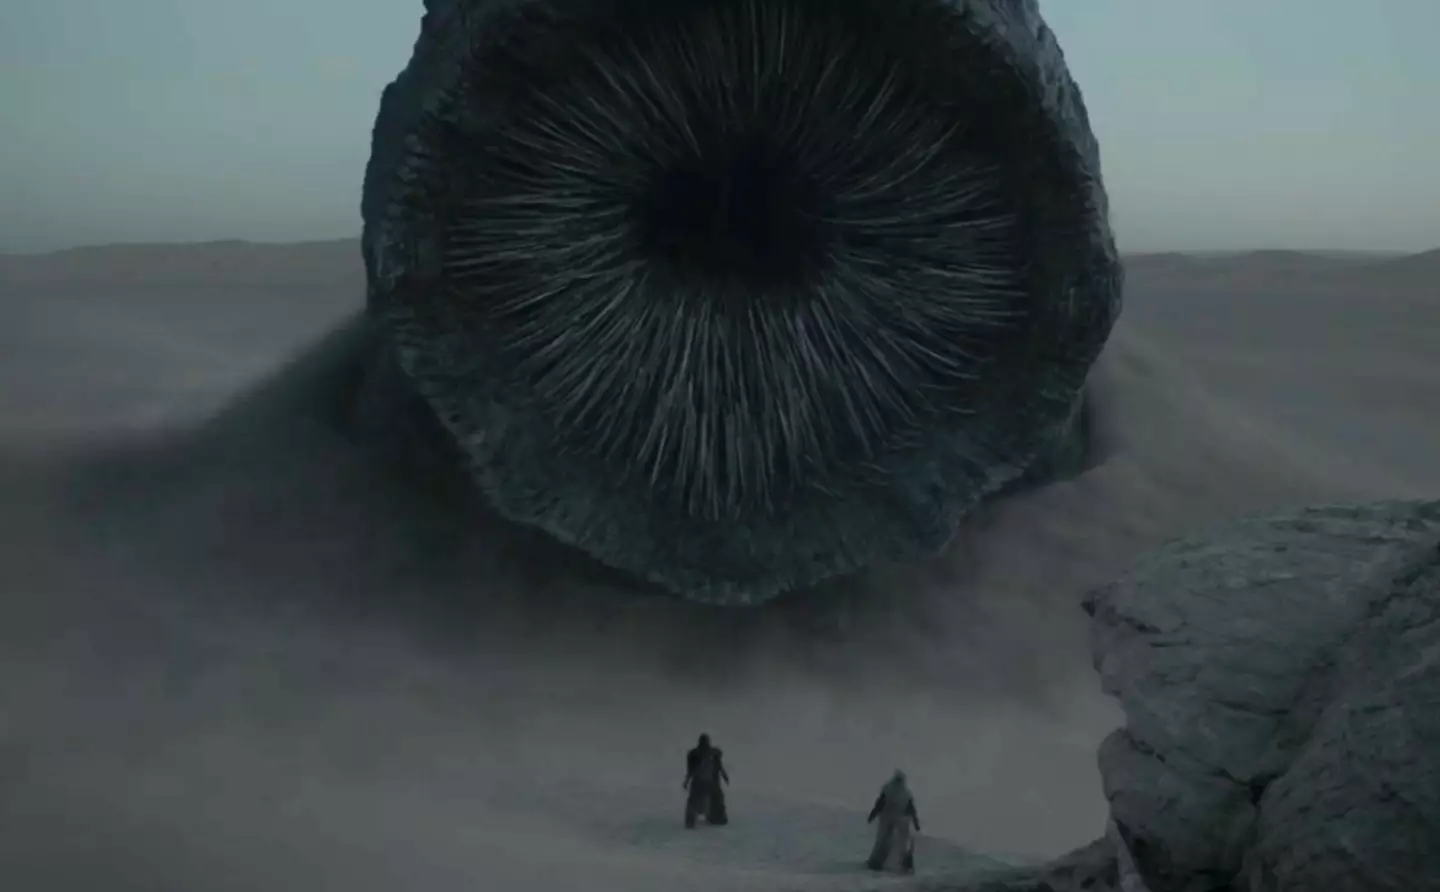 The sandworm inhabits Arrakis in the Dune films.